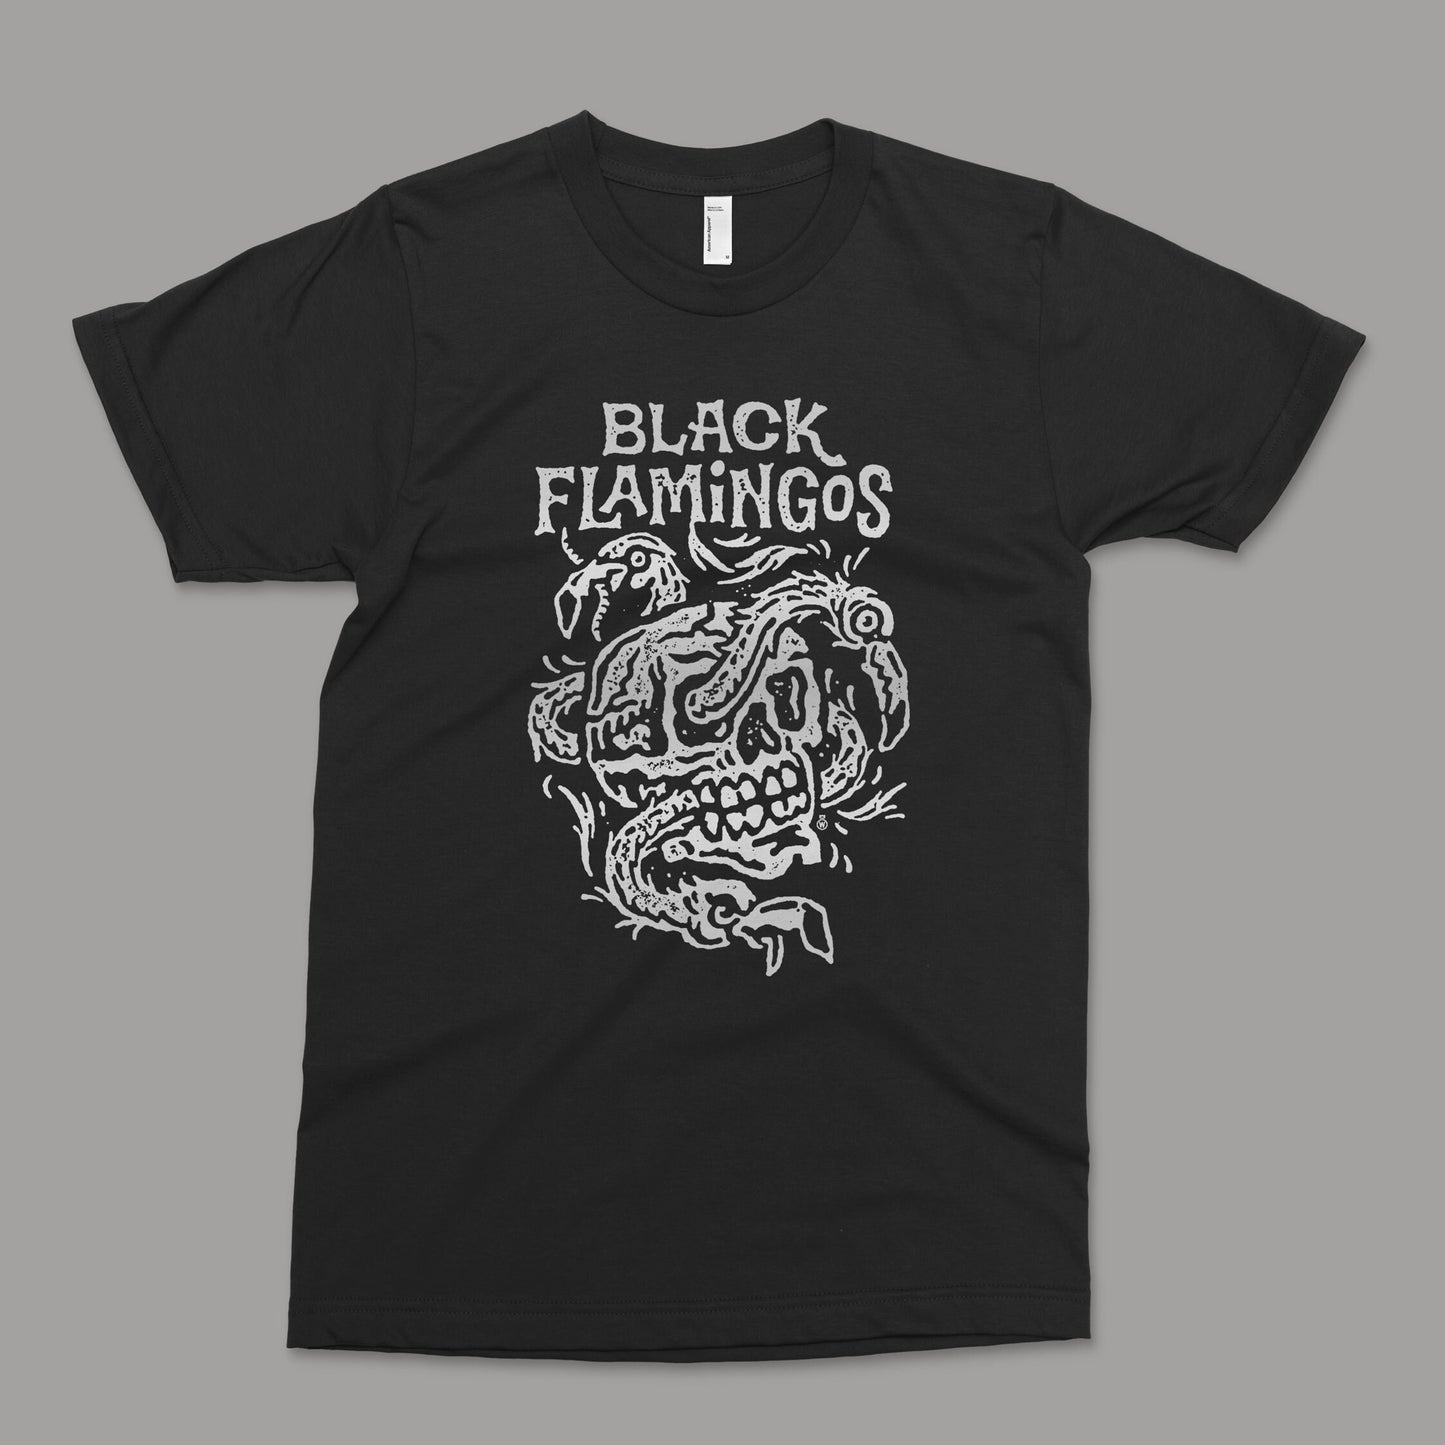 Black Flamingos "Feathery" T